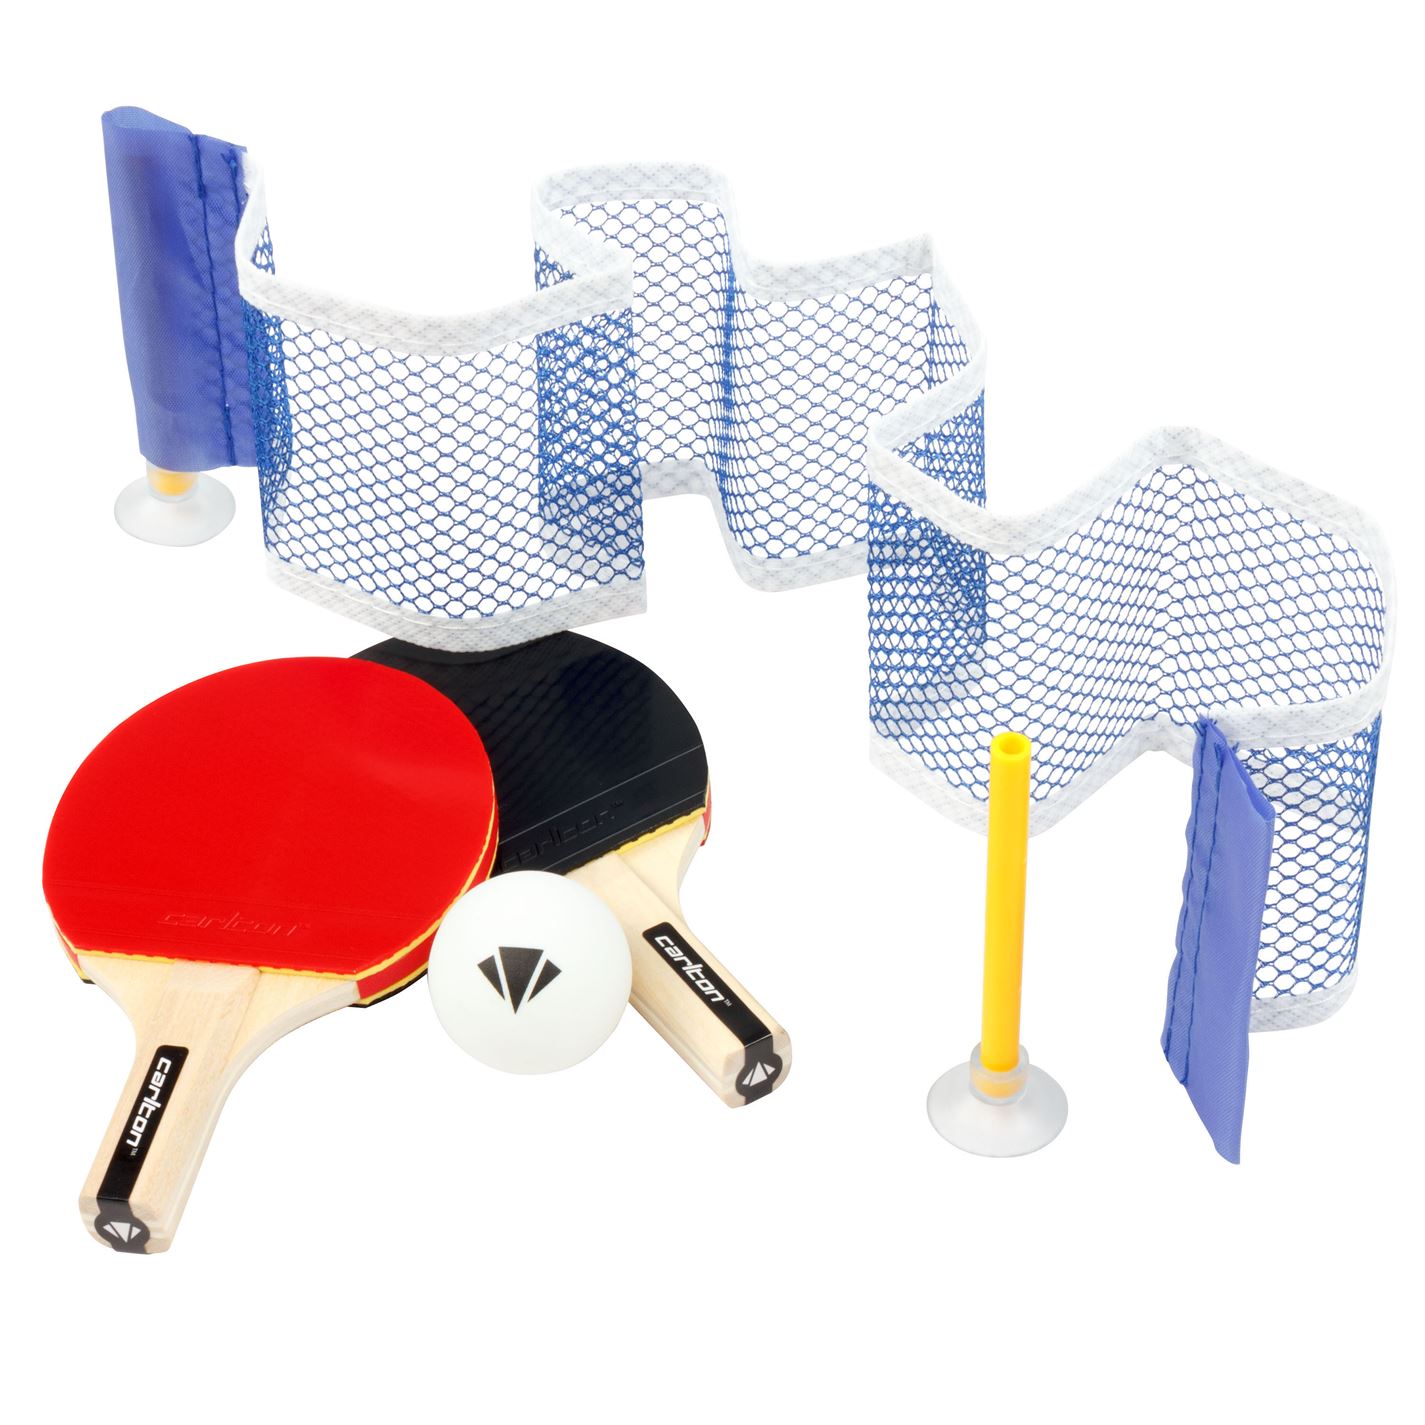 Carlton Mini Ping Pong Set